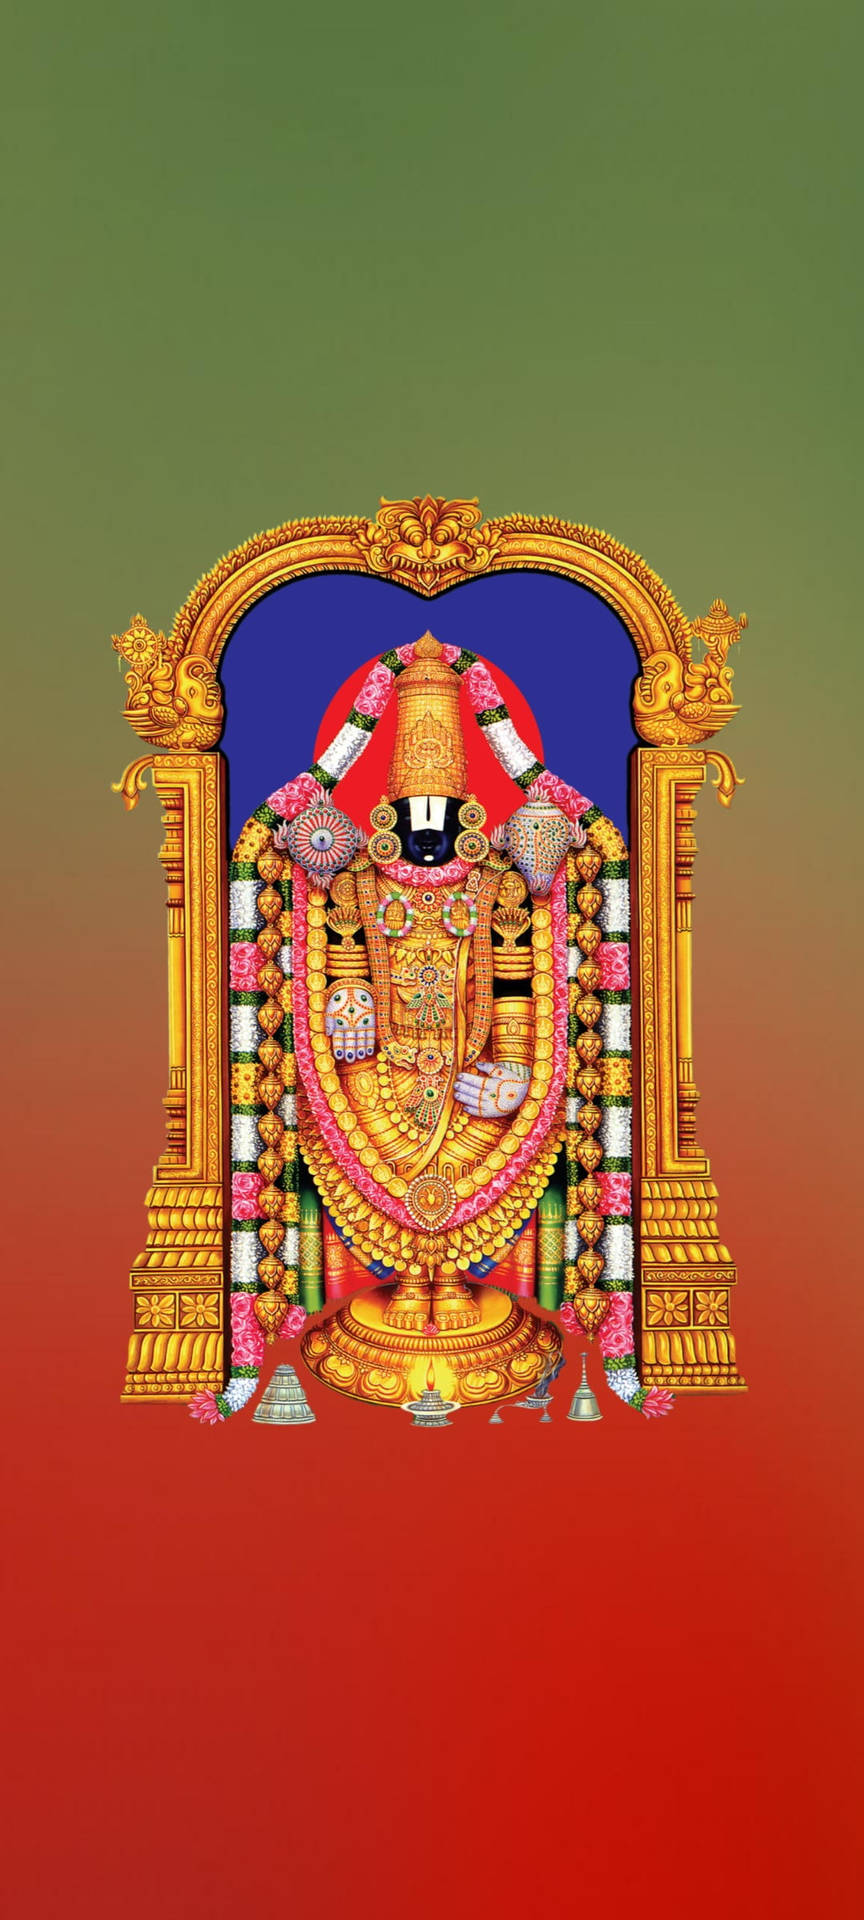 Venkateswara Swamy Hindu Deity Wallpaper